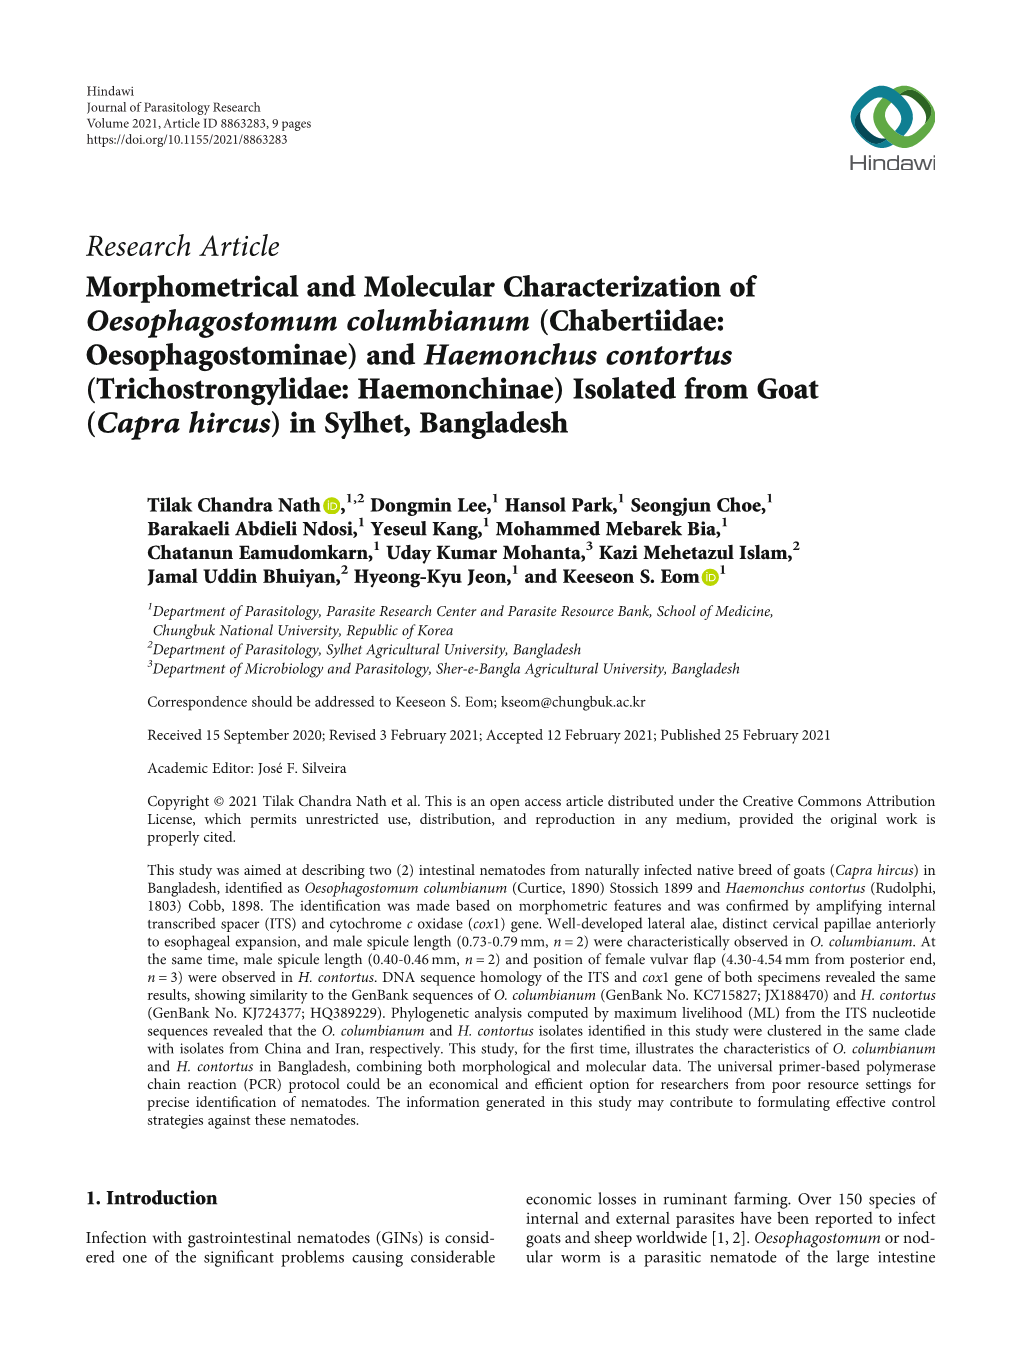 Morphometrical and Molecular Characterization Of